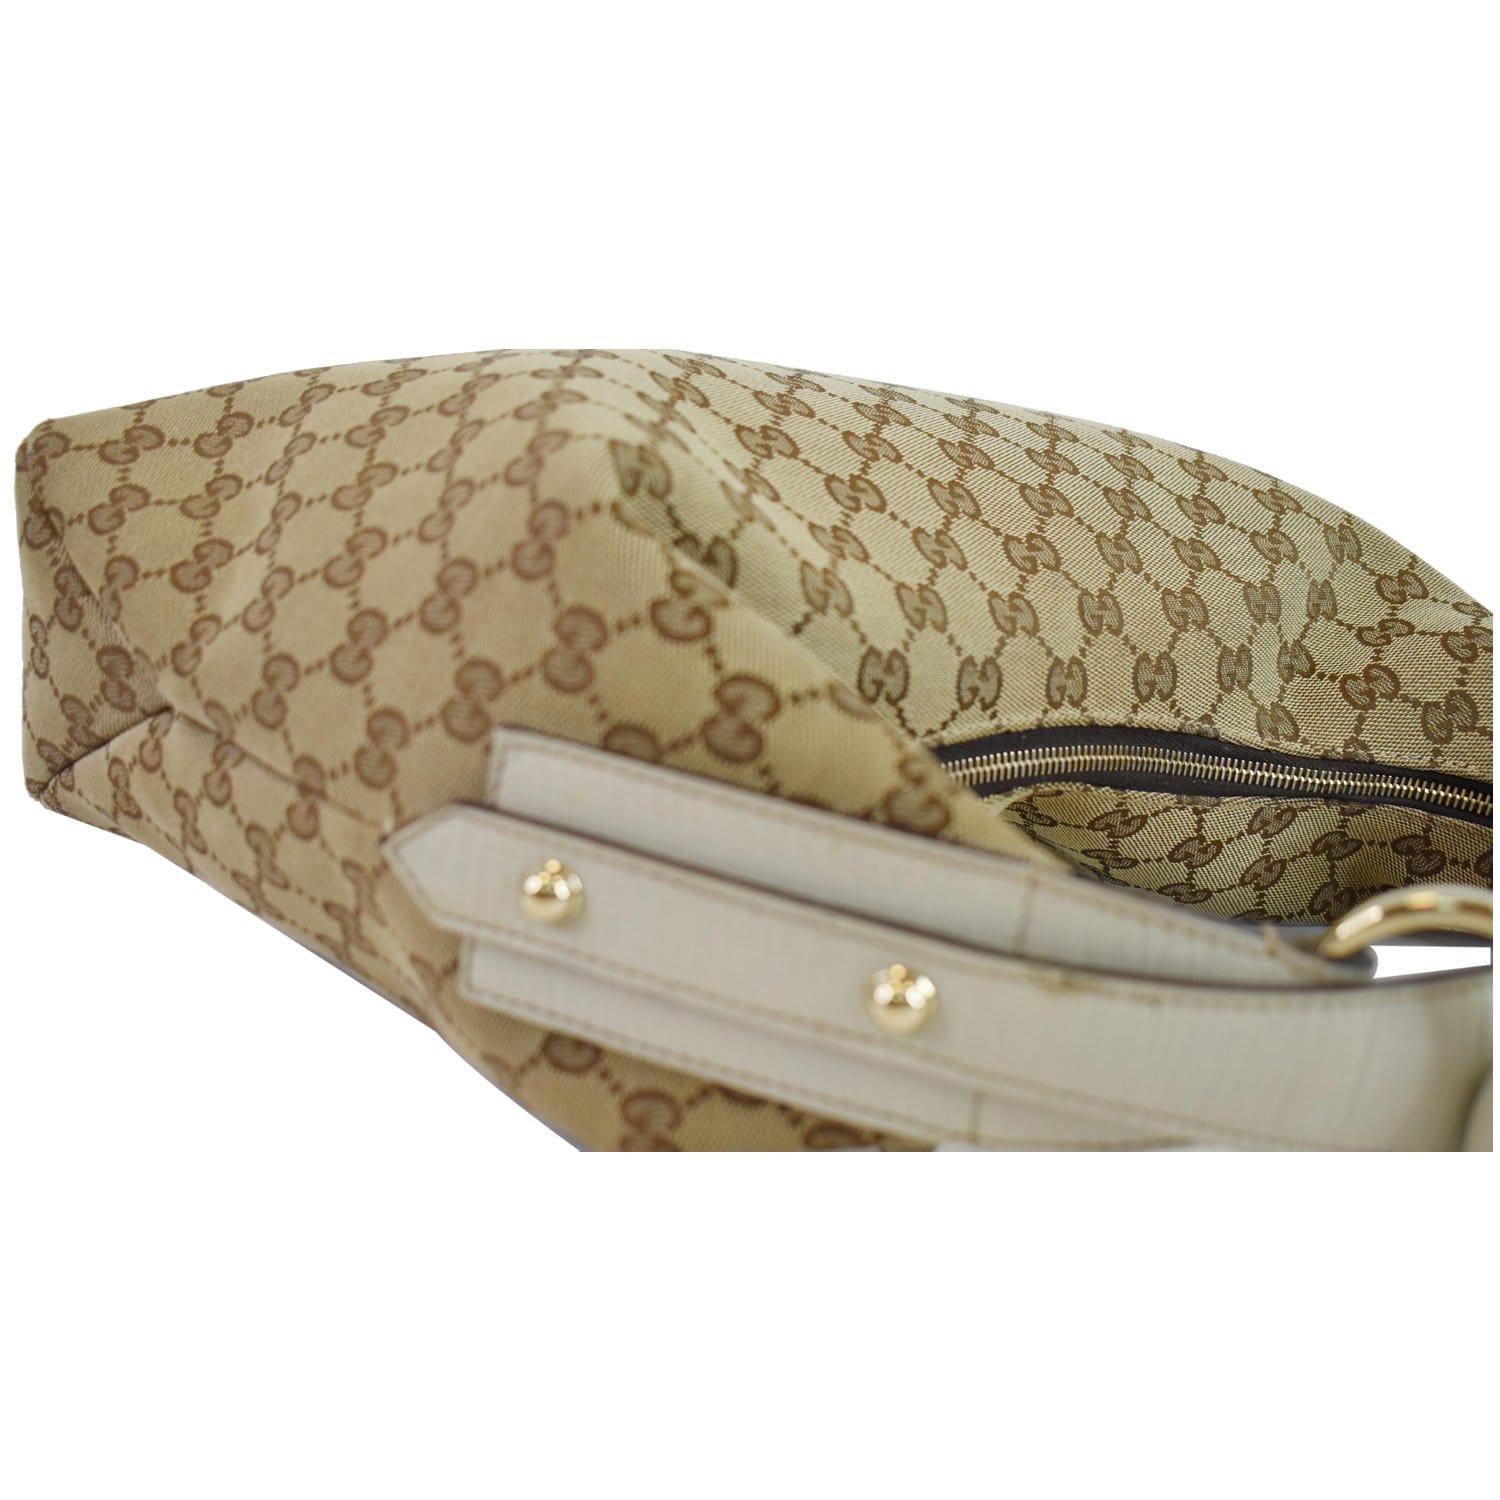 GUCCI Brown Leather Medium Horsebit Hobo Shoulder Bag 115867